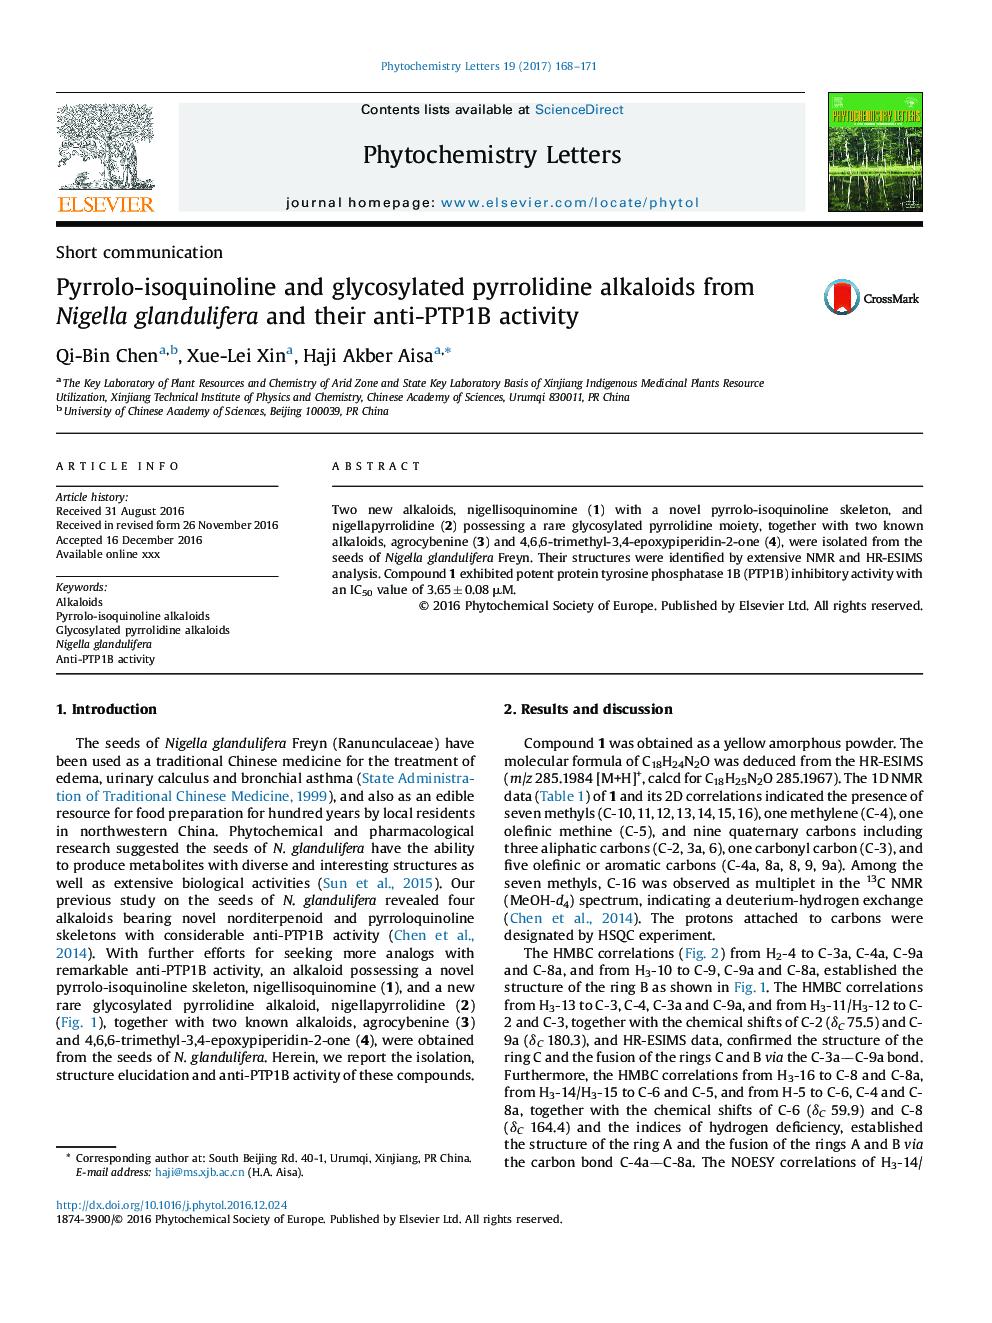 Pyrrolo-isoquinoline and glycosylated pyrrolidine alkaloids from Nigella glandulifera and their anti-PTP1B activity